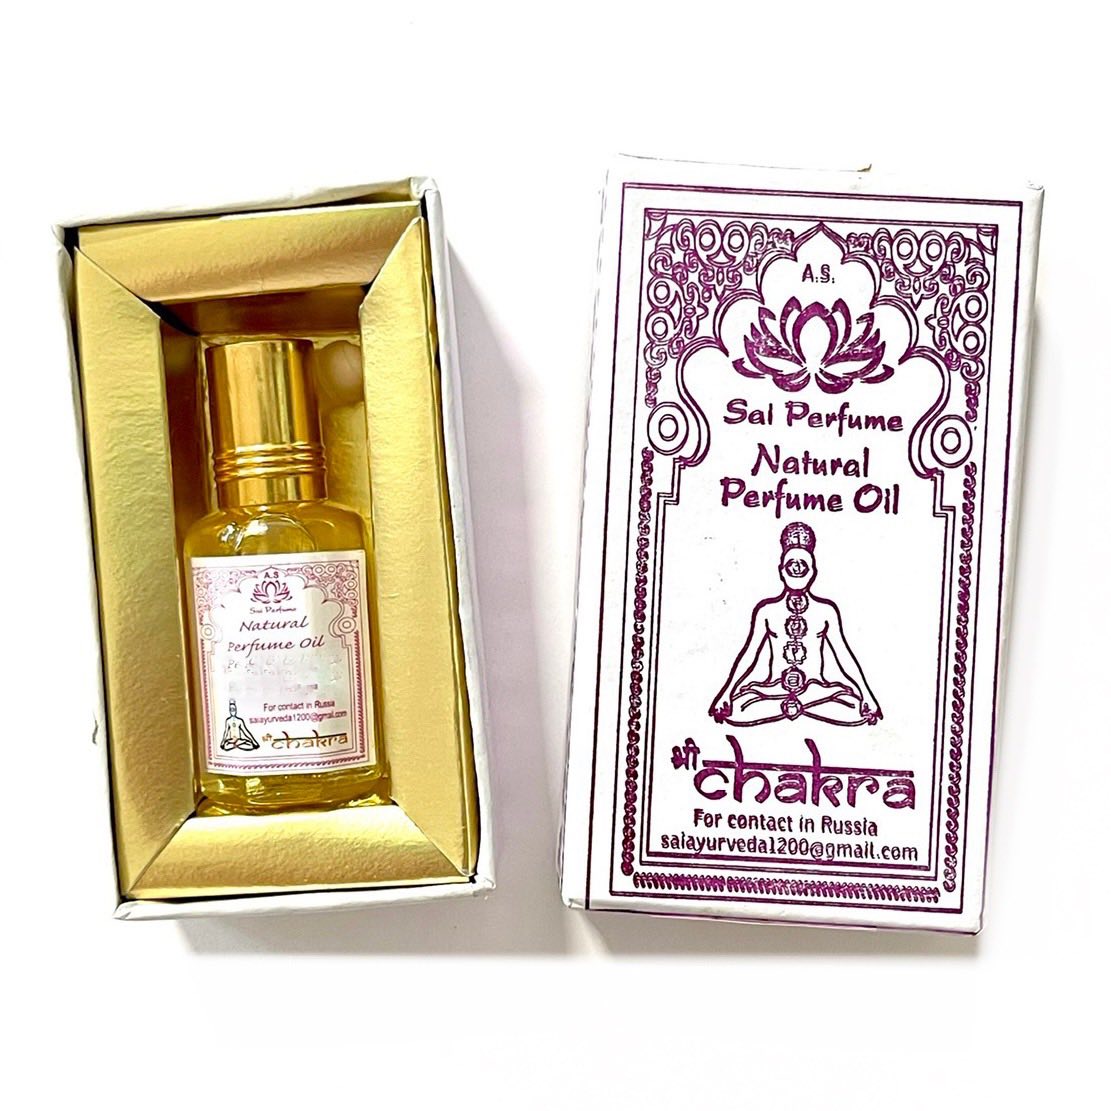 Sai Perfume Natural Oil GOLDEN WOOD, Shri Chakra (Натуральное парфюмерное масло ЗОЛОТОЙ ЛЕС, Шри Чакра), коробка, 8 мл.